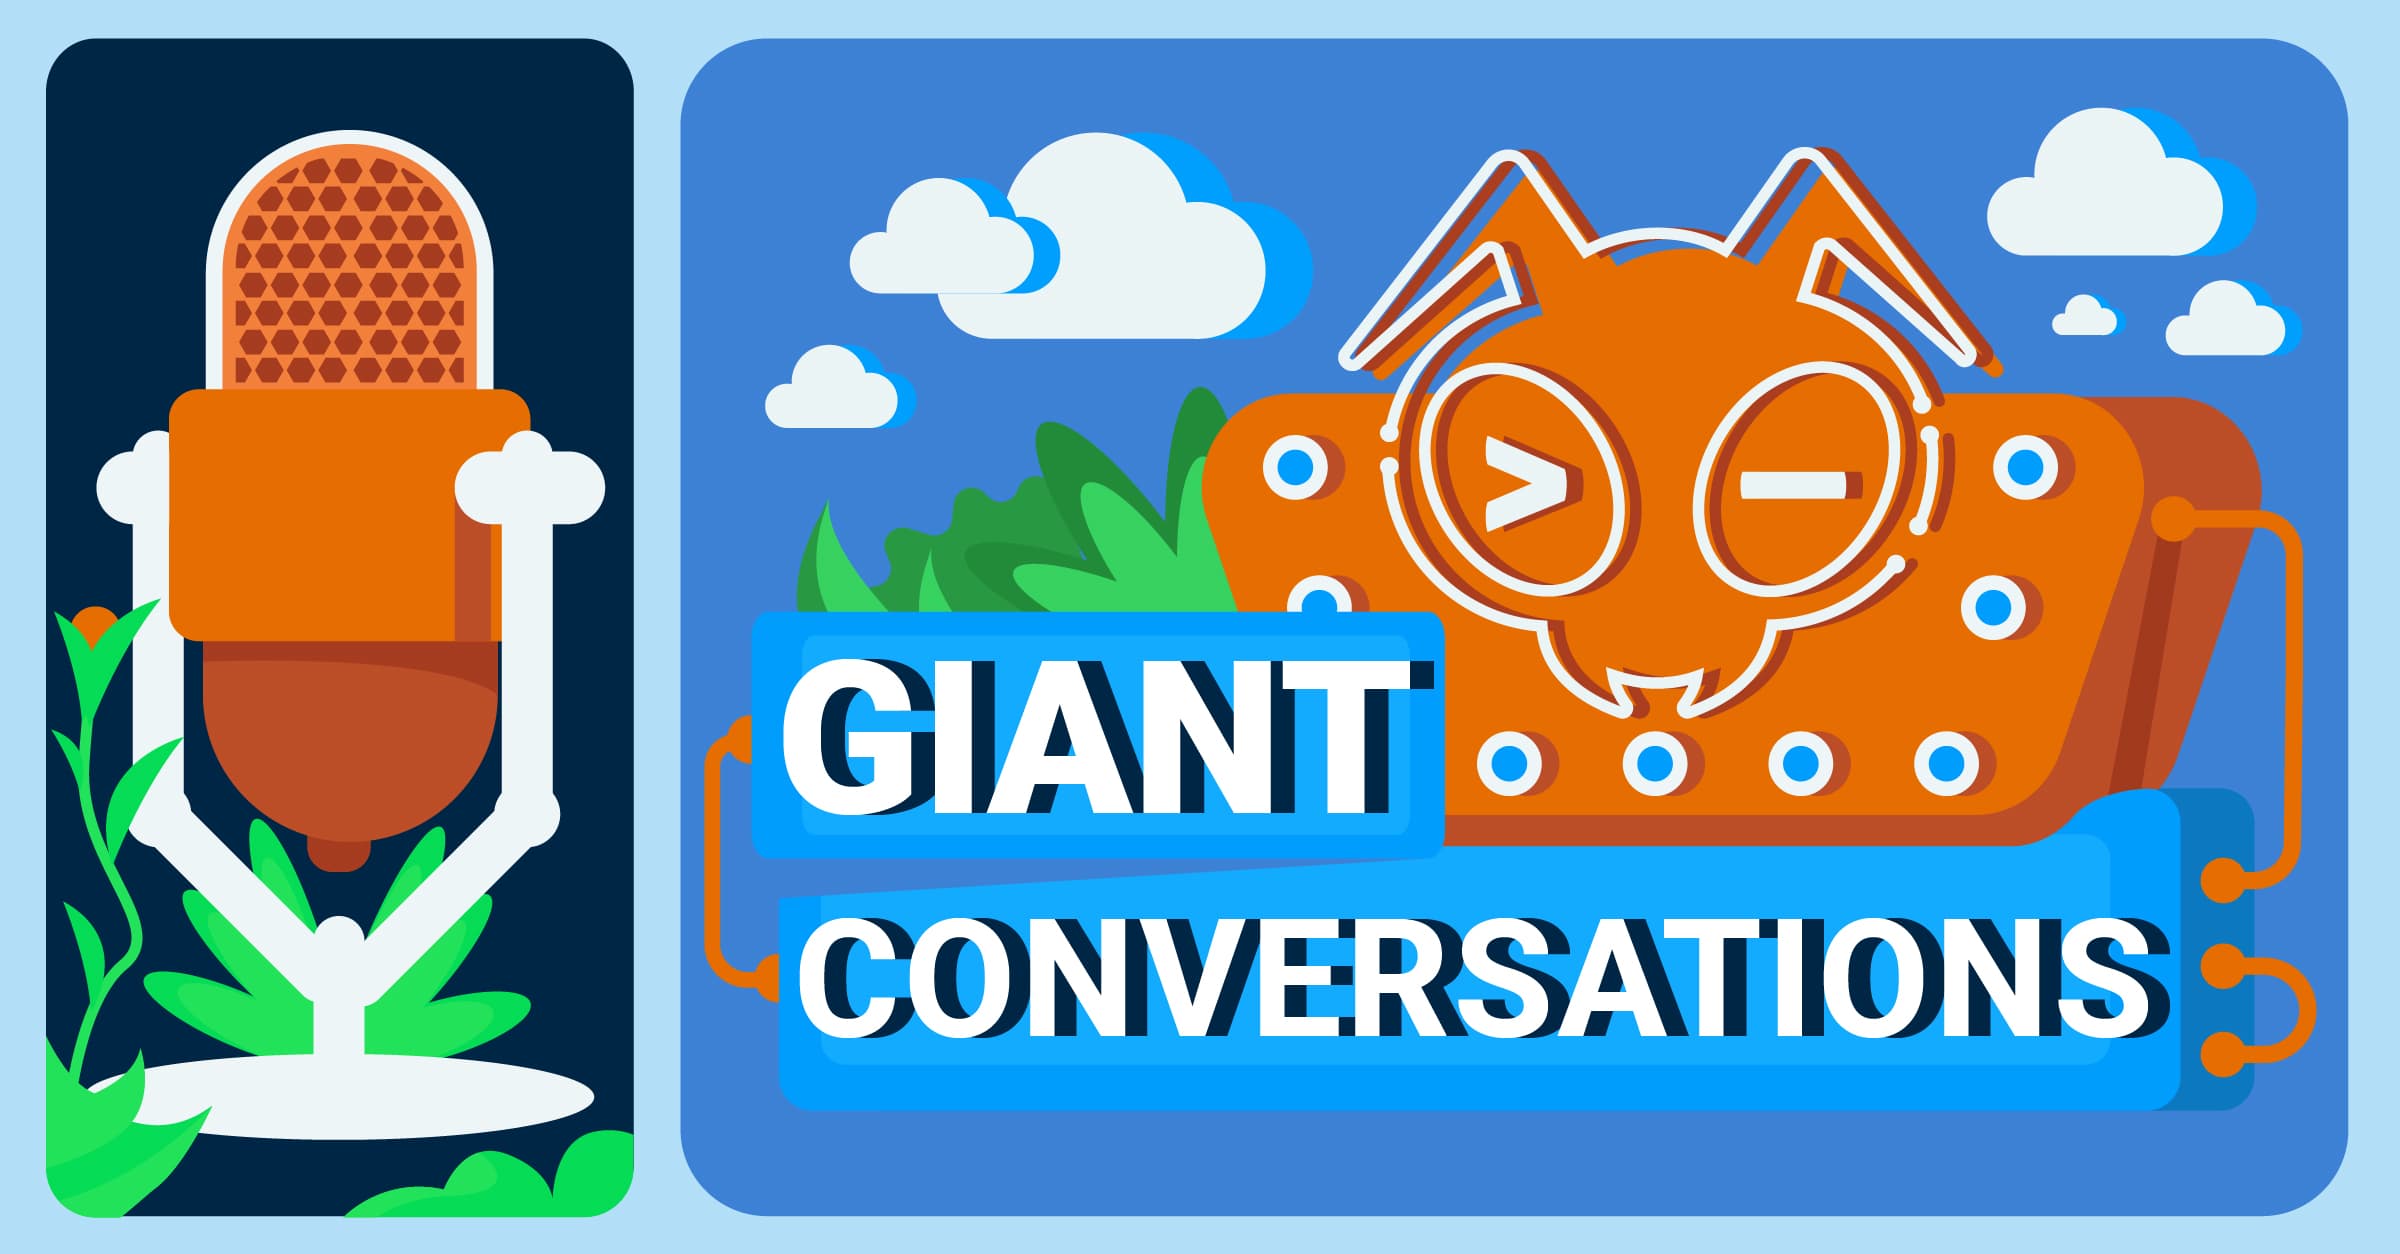 Giant Conversations image thumbnail